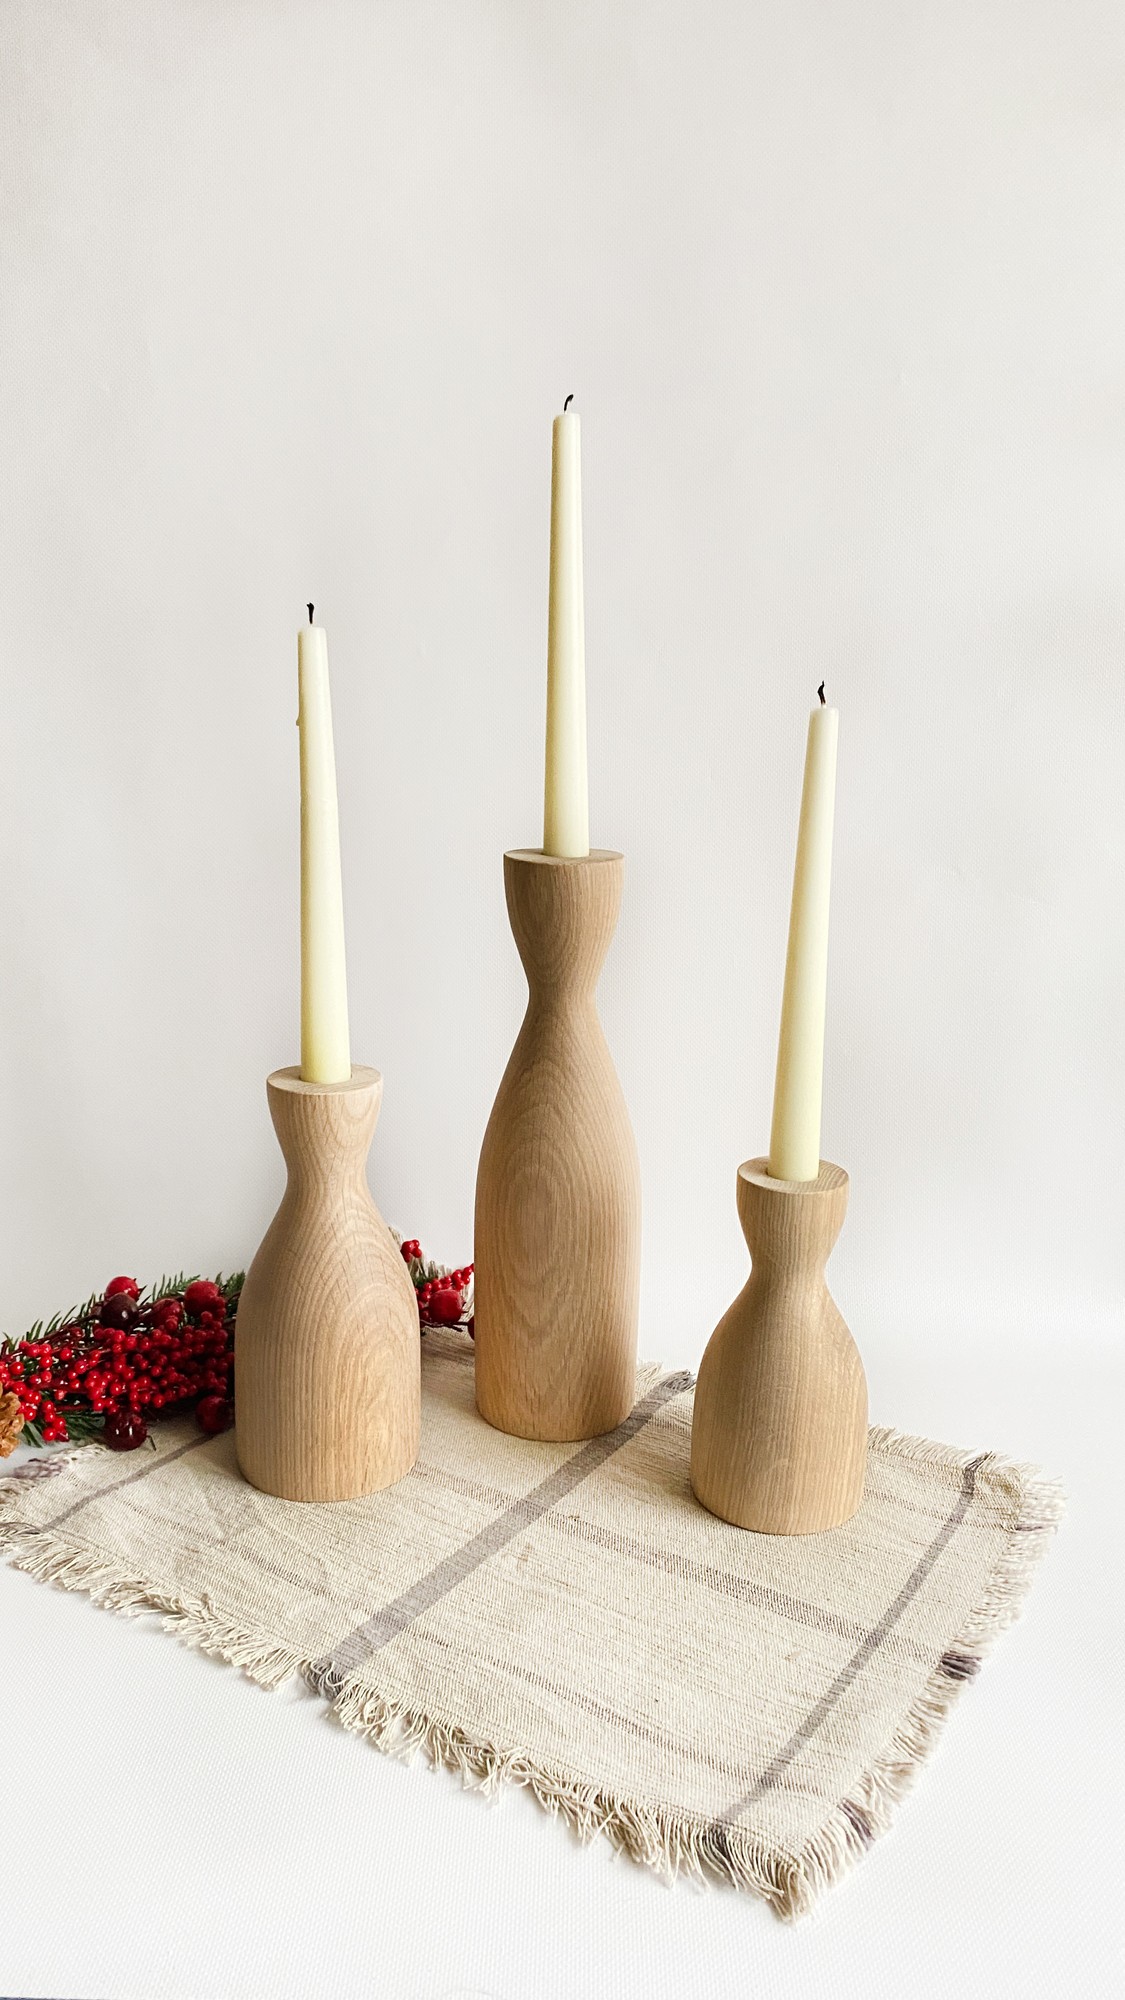 Handmade candlesticks set of 3, decorative rustic  wooden vase